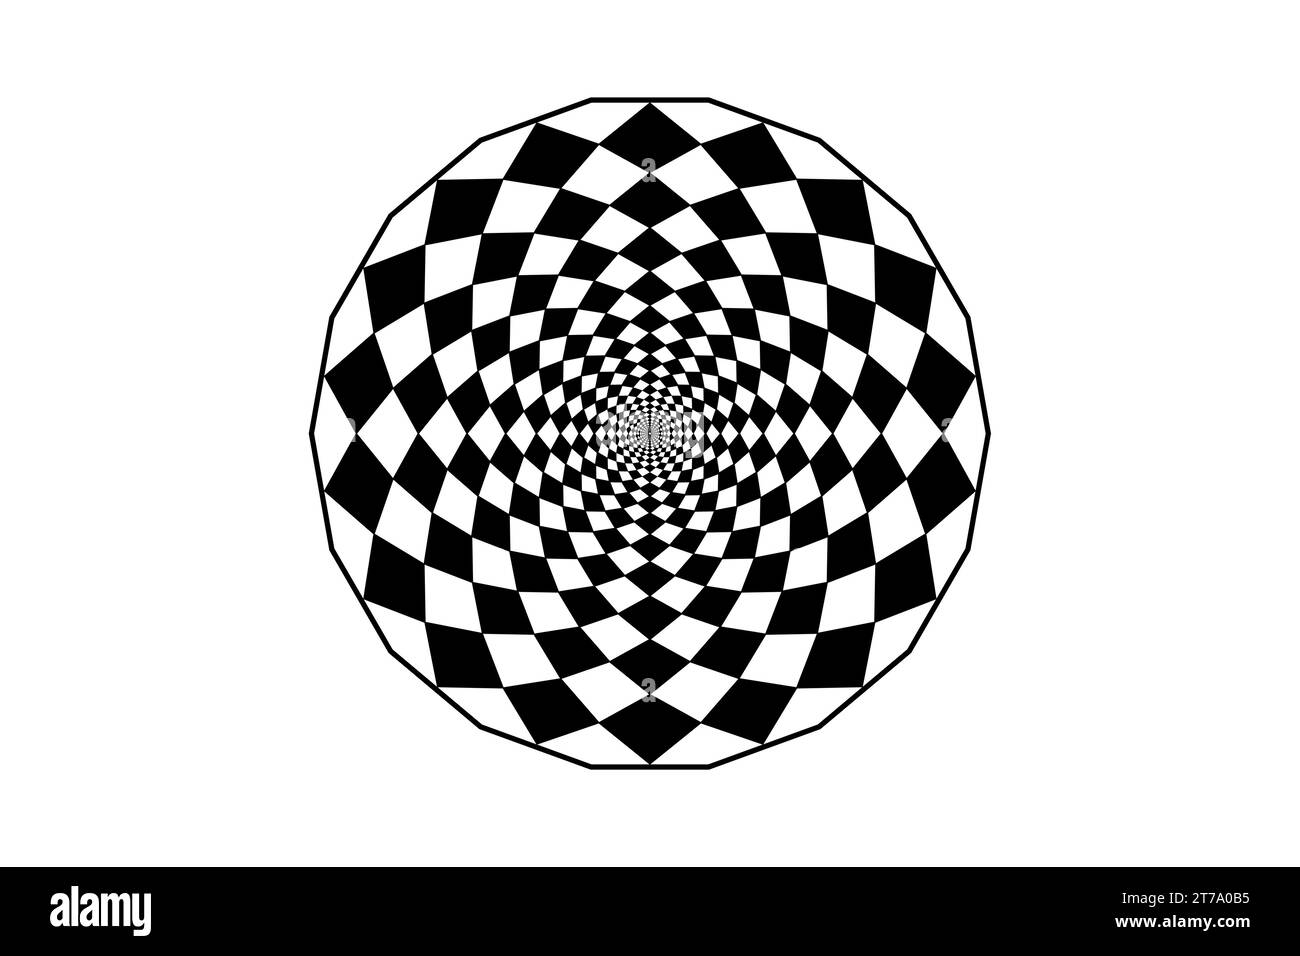 Hypnotic art mandala design, optical spiral illusion. Optical Checkered Circle Classic circular Op Art design in black and white. Vector illustration Stock Vector